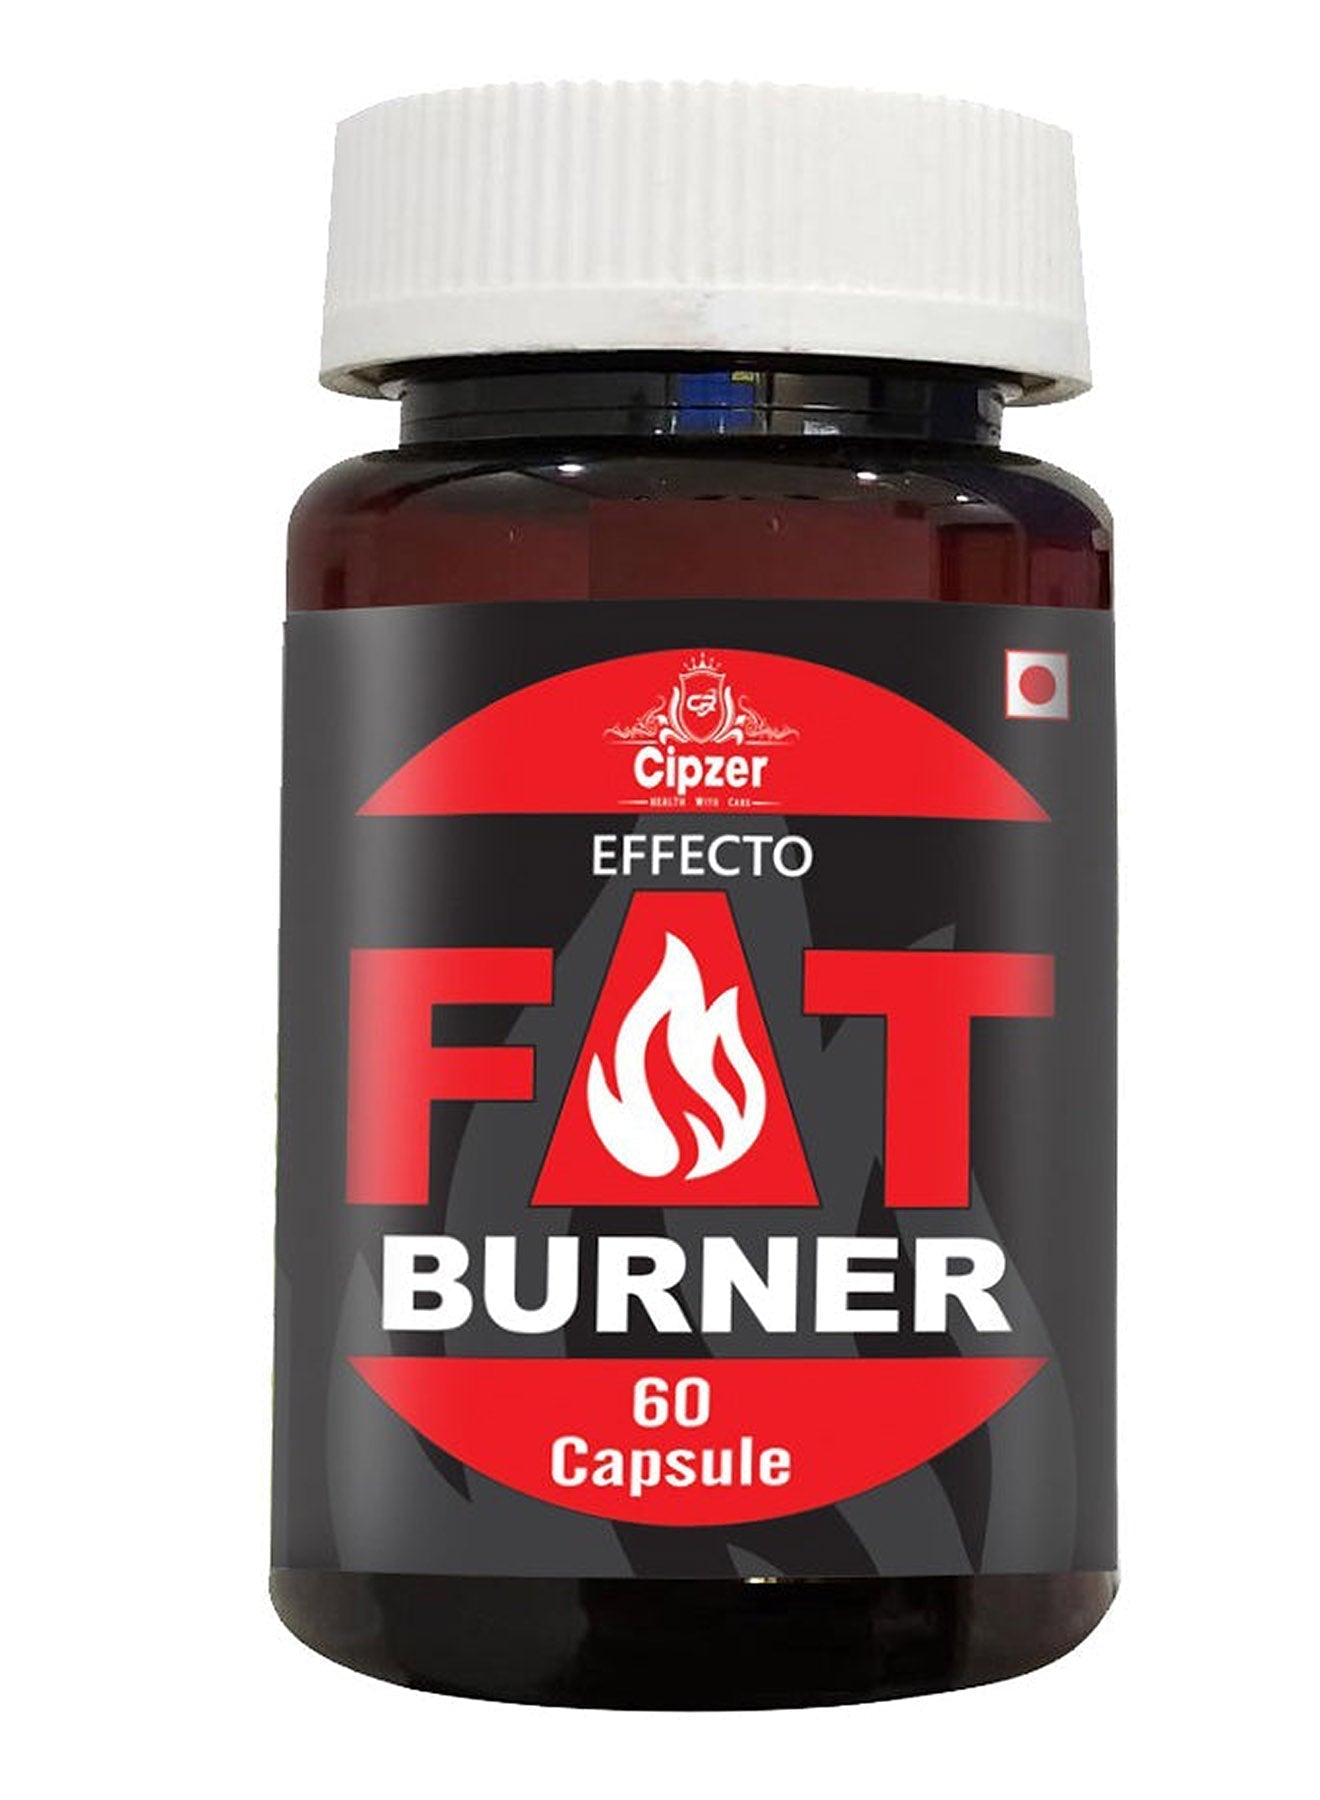 Cipzer Effecto FAT Burner 60 Capsules Value Pack of 2 